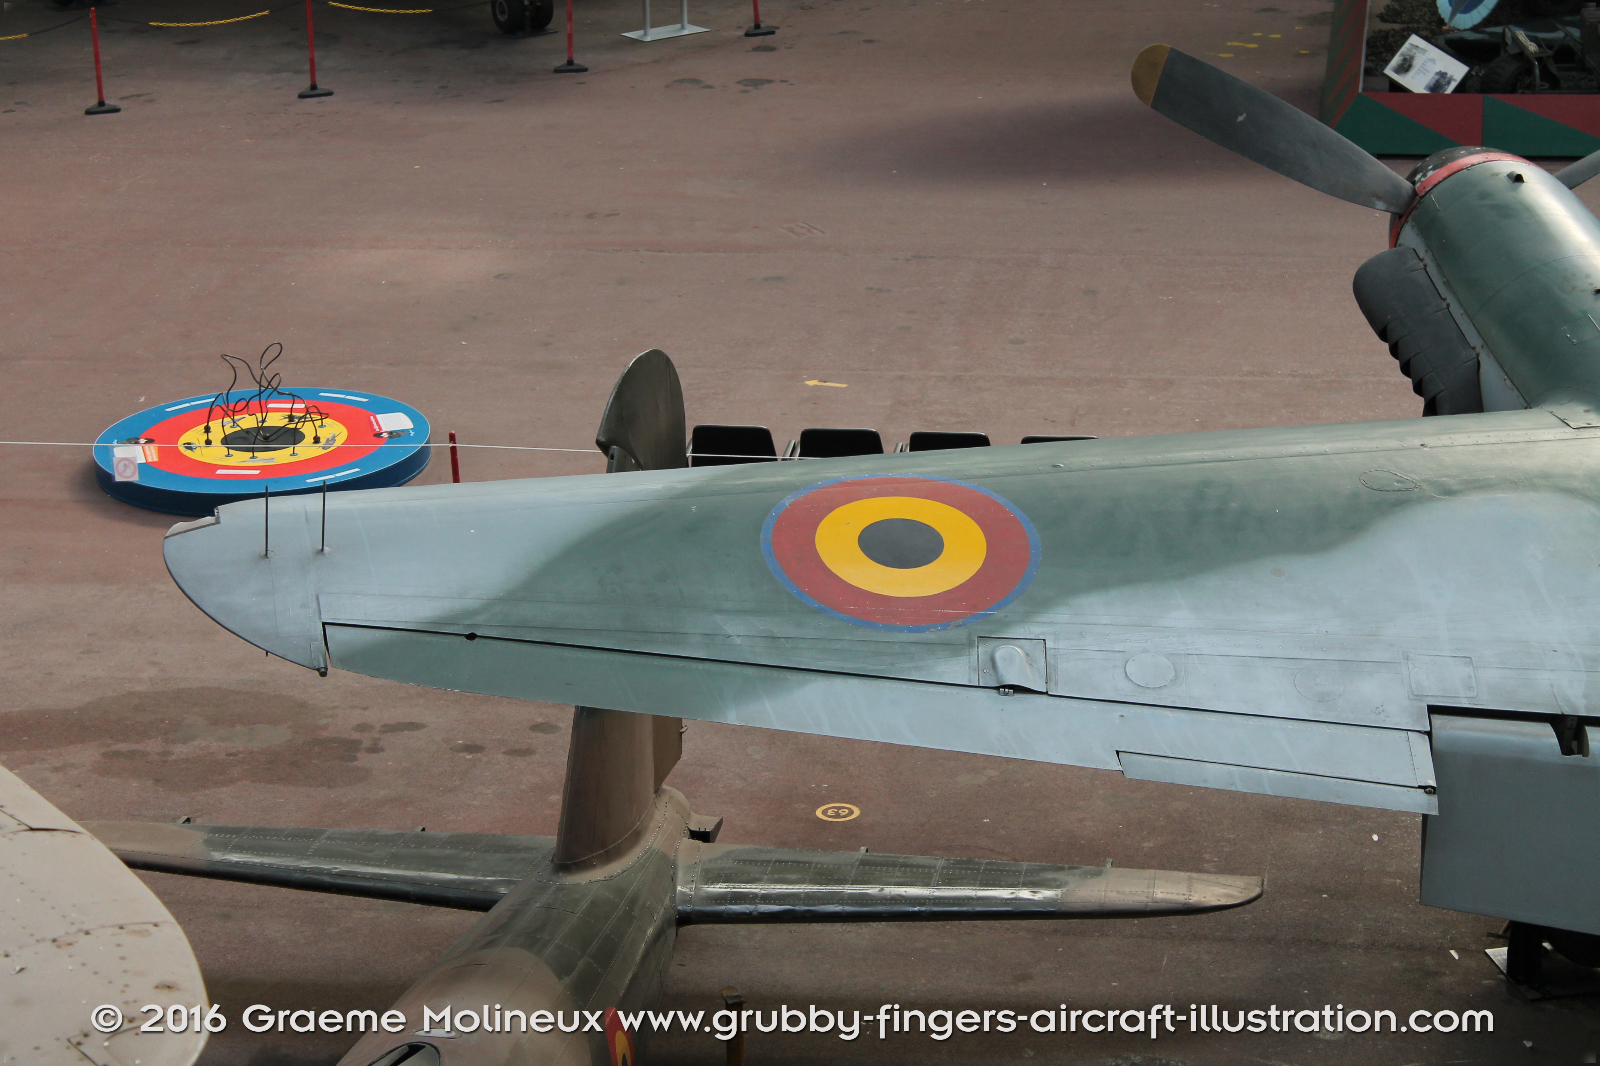 de_Havilland_Mosquito_Walkaround_Mk30_MB-42_Belgian_Air_Force_Museum_2015_03_GraemeMolineux